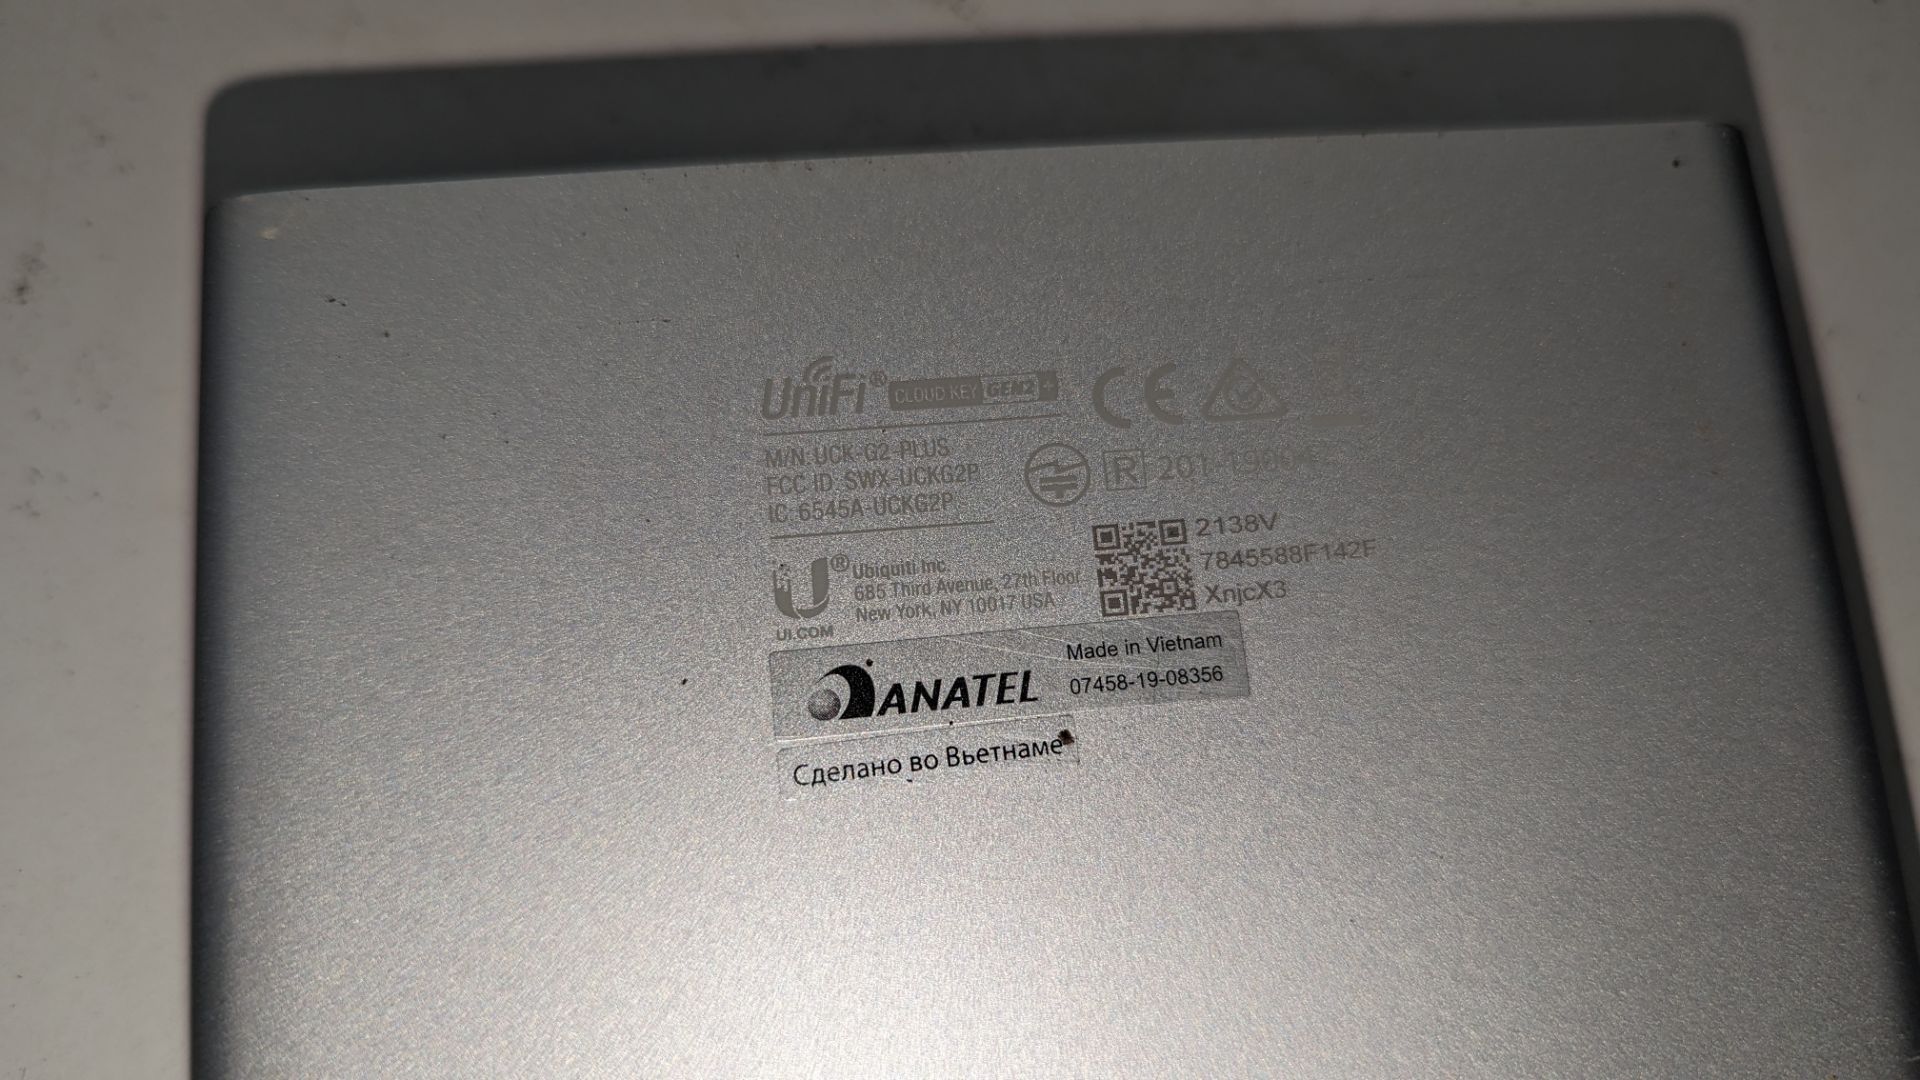 Anatel Unifi Cloud Key Gen 2+ product code UCKG2-PLUS - Image 6 of 7